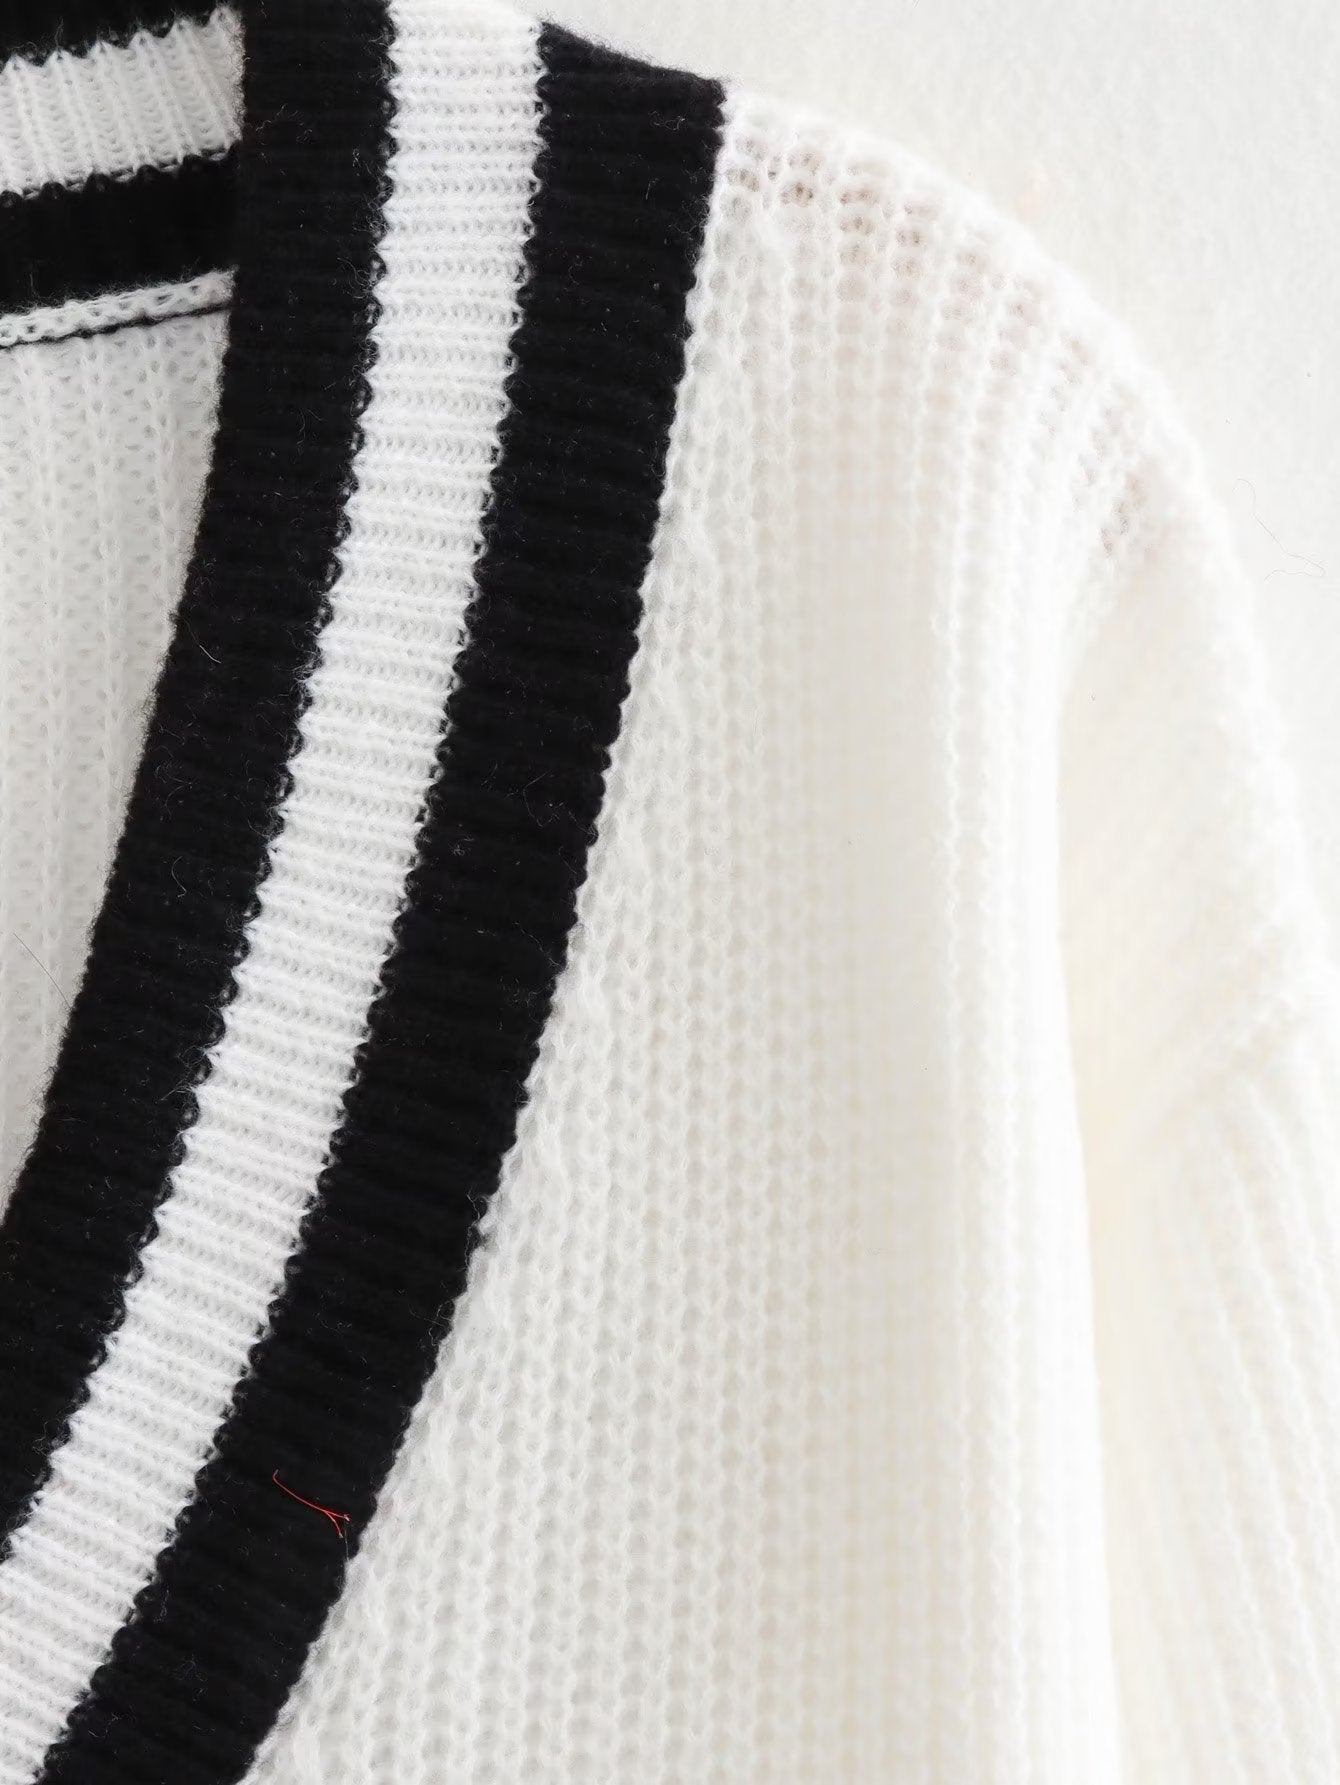 Black Stripes Accent Loose White Sweater - Kelly Obi New York